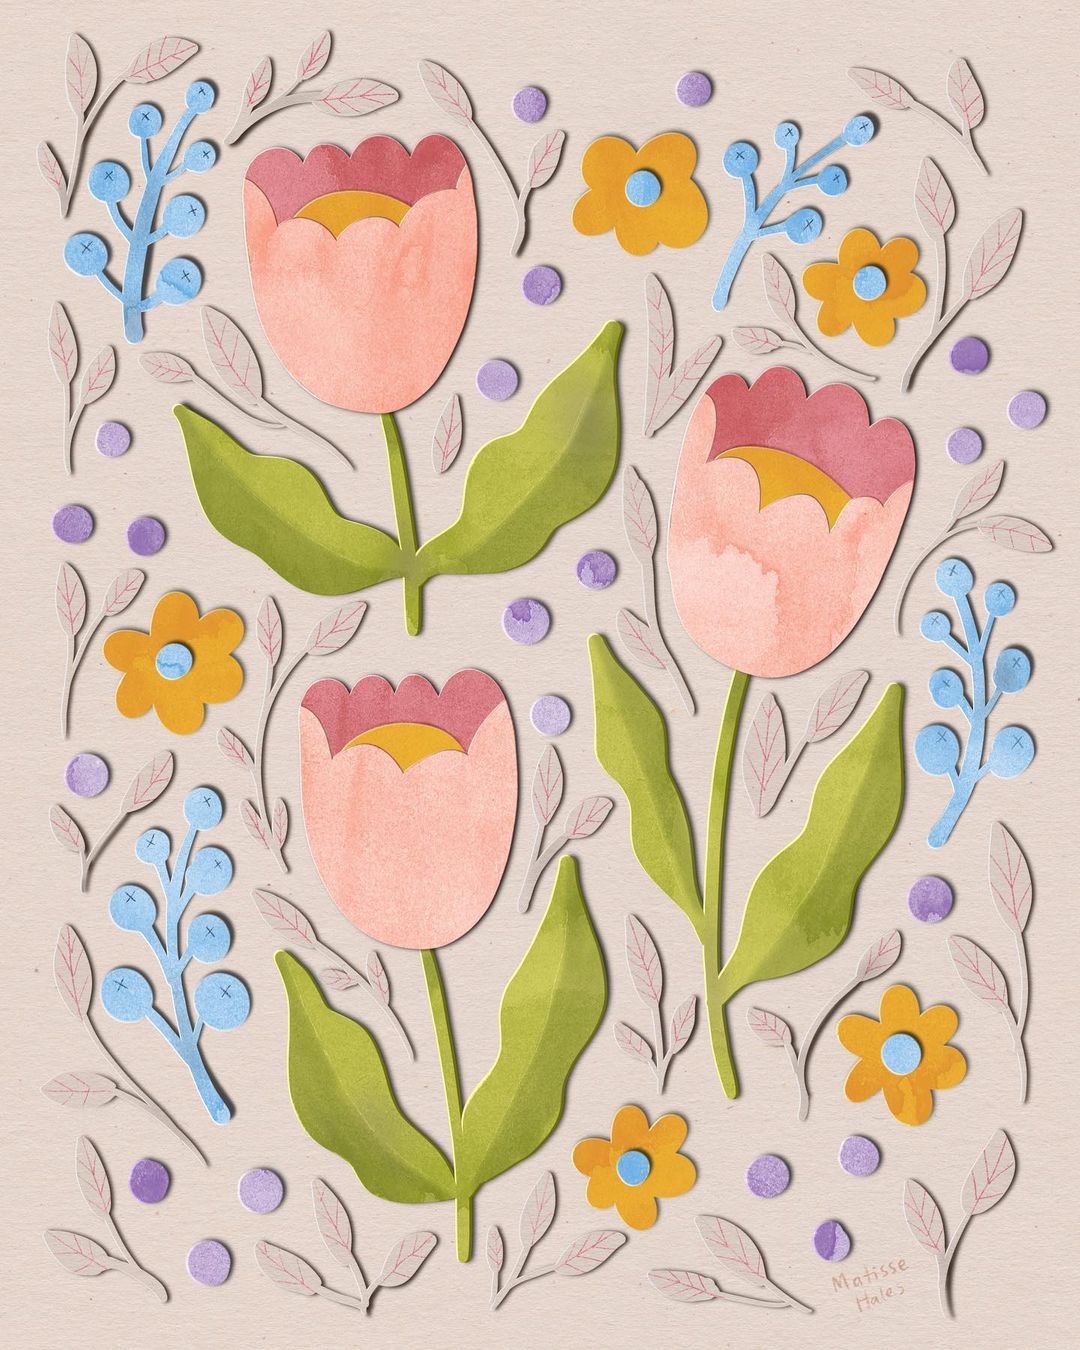 Paper Artist Matisse Hales' Work Spreads A Positive Message